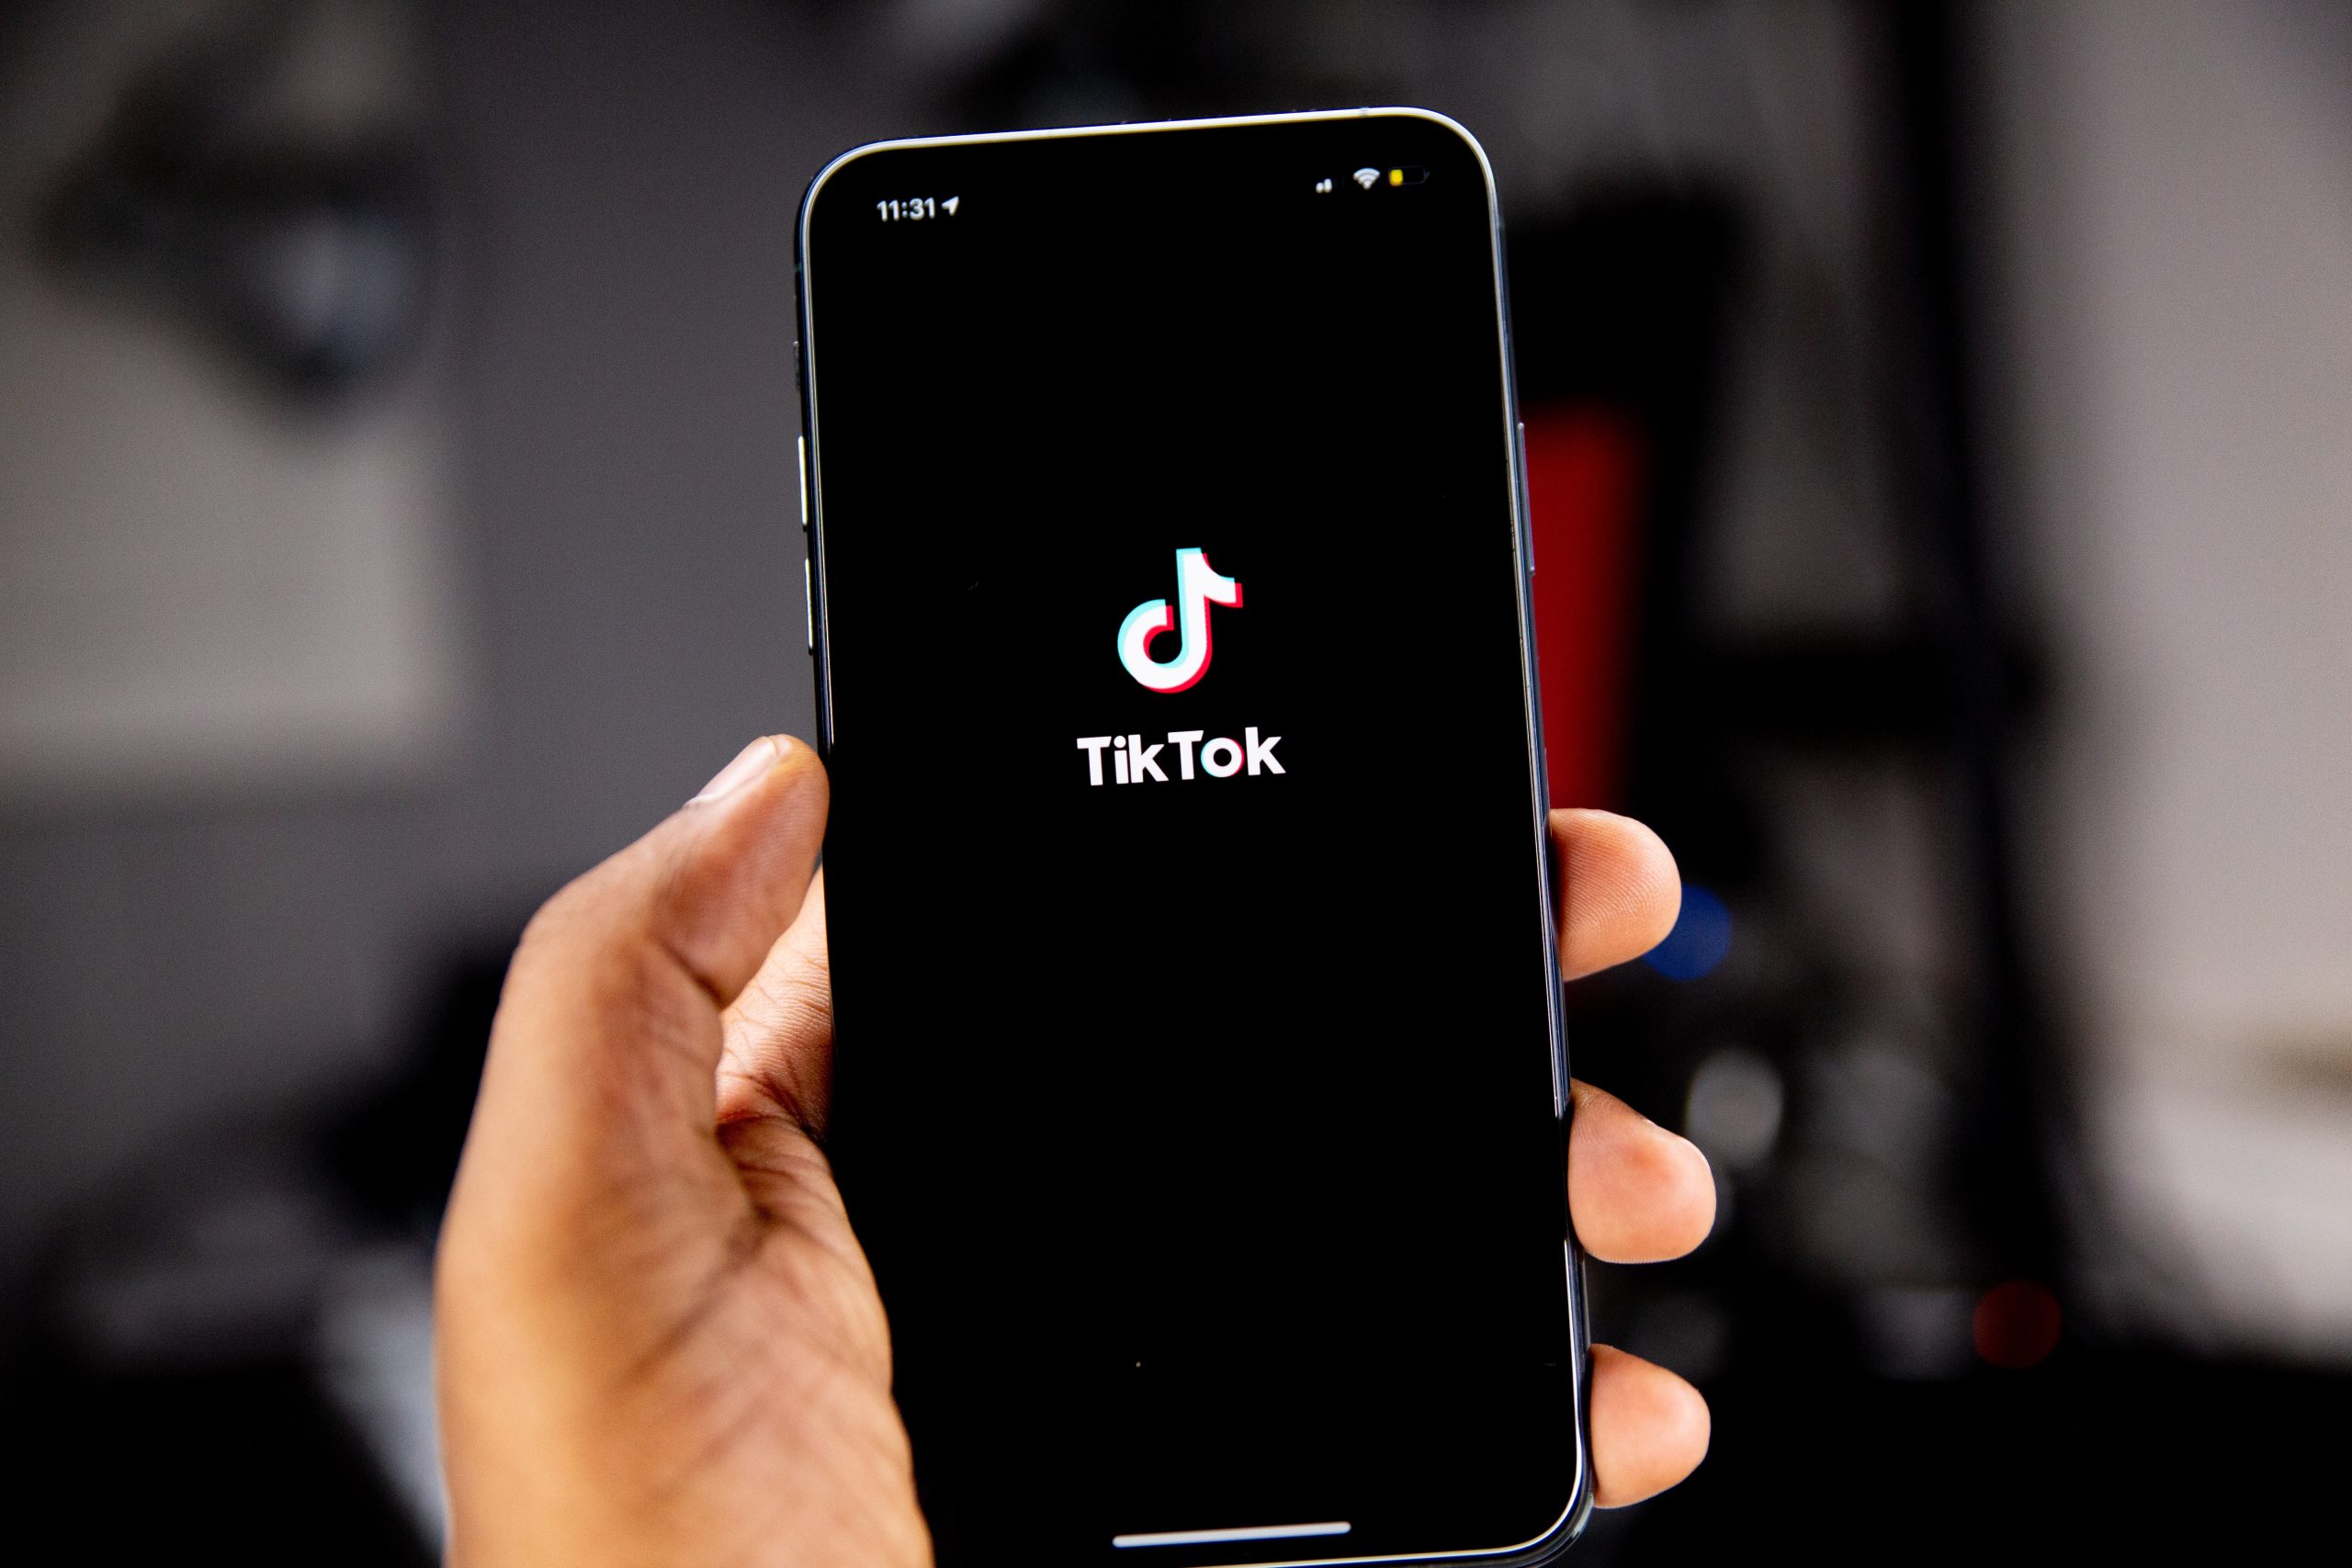 TikTok Trends - An image of a smartphone showing the TikTok logo.